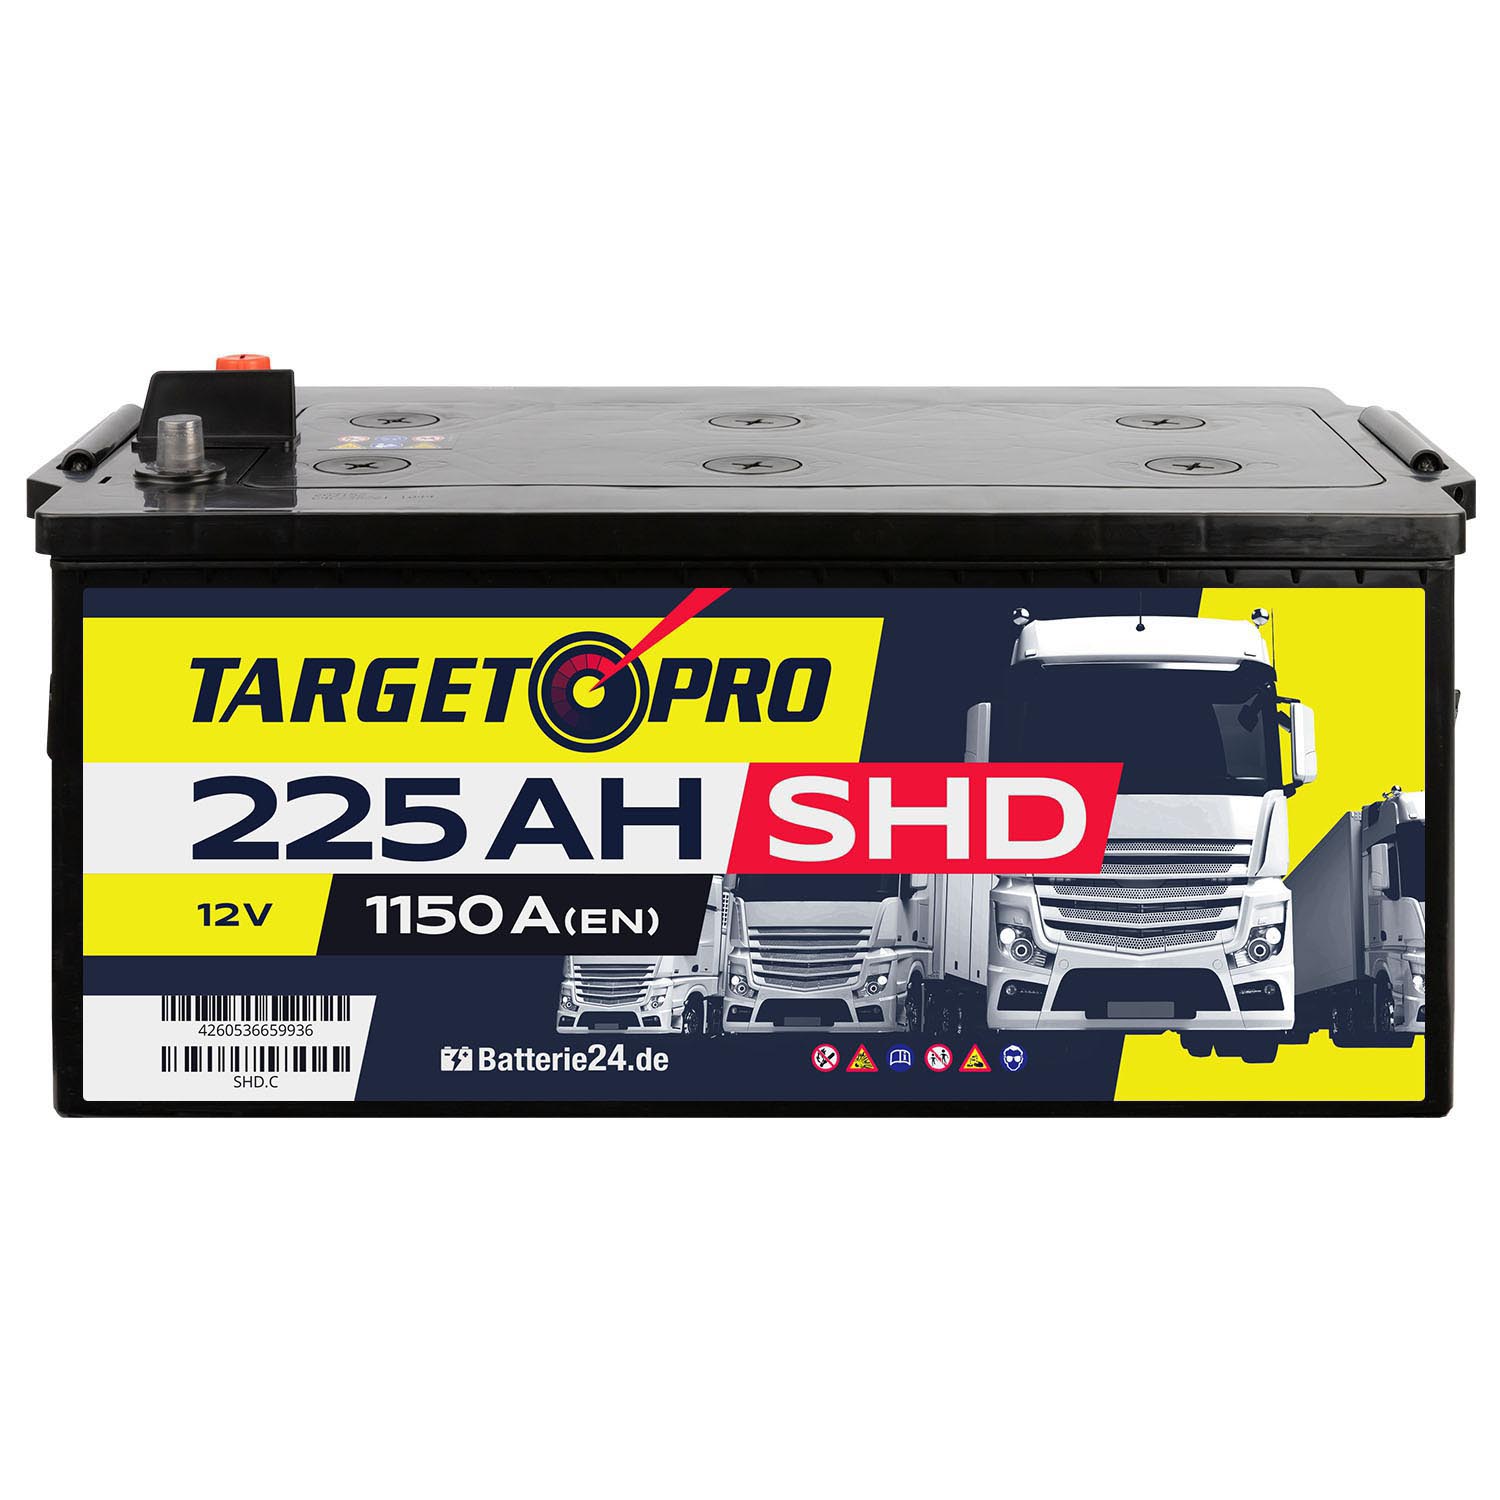 Target Pro SHD 12V 225Ah LKW Batterie